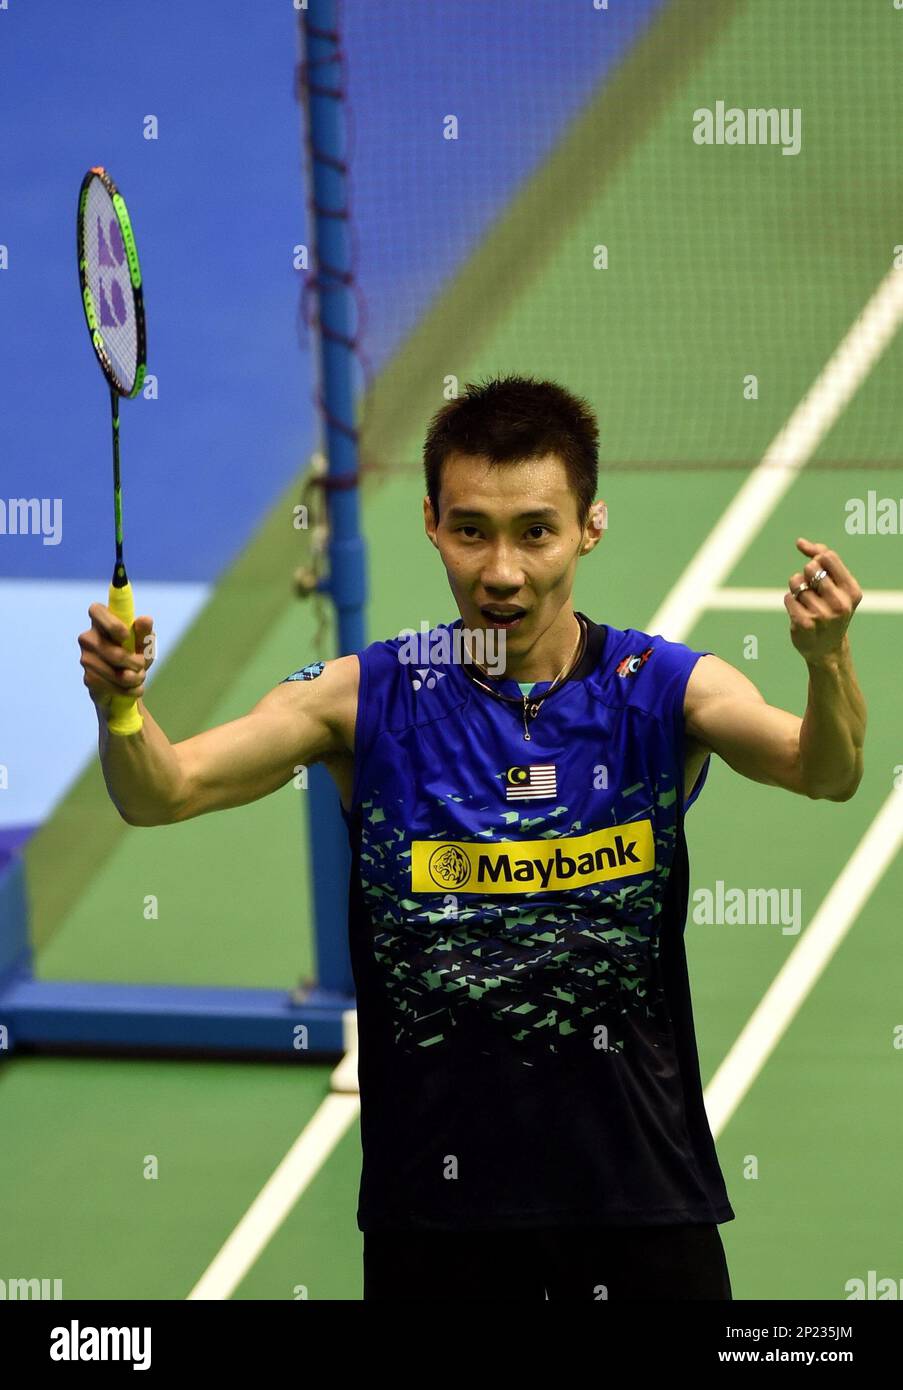 Datuk Lee Chong Wei of Malaysia celebrates after defeating Tian Houwei of China in their mens singles final match during the Hong Kong Open Badminton Championships 2015 in Hong Kong, China, 22